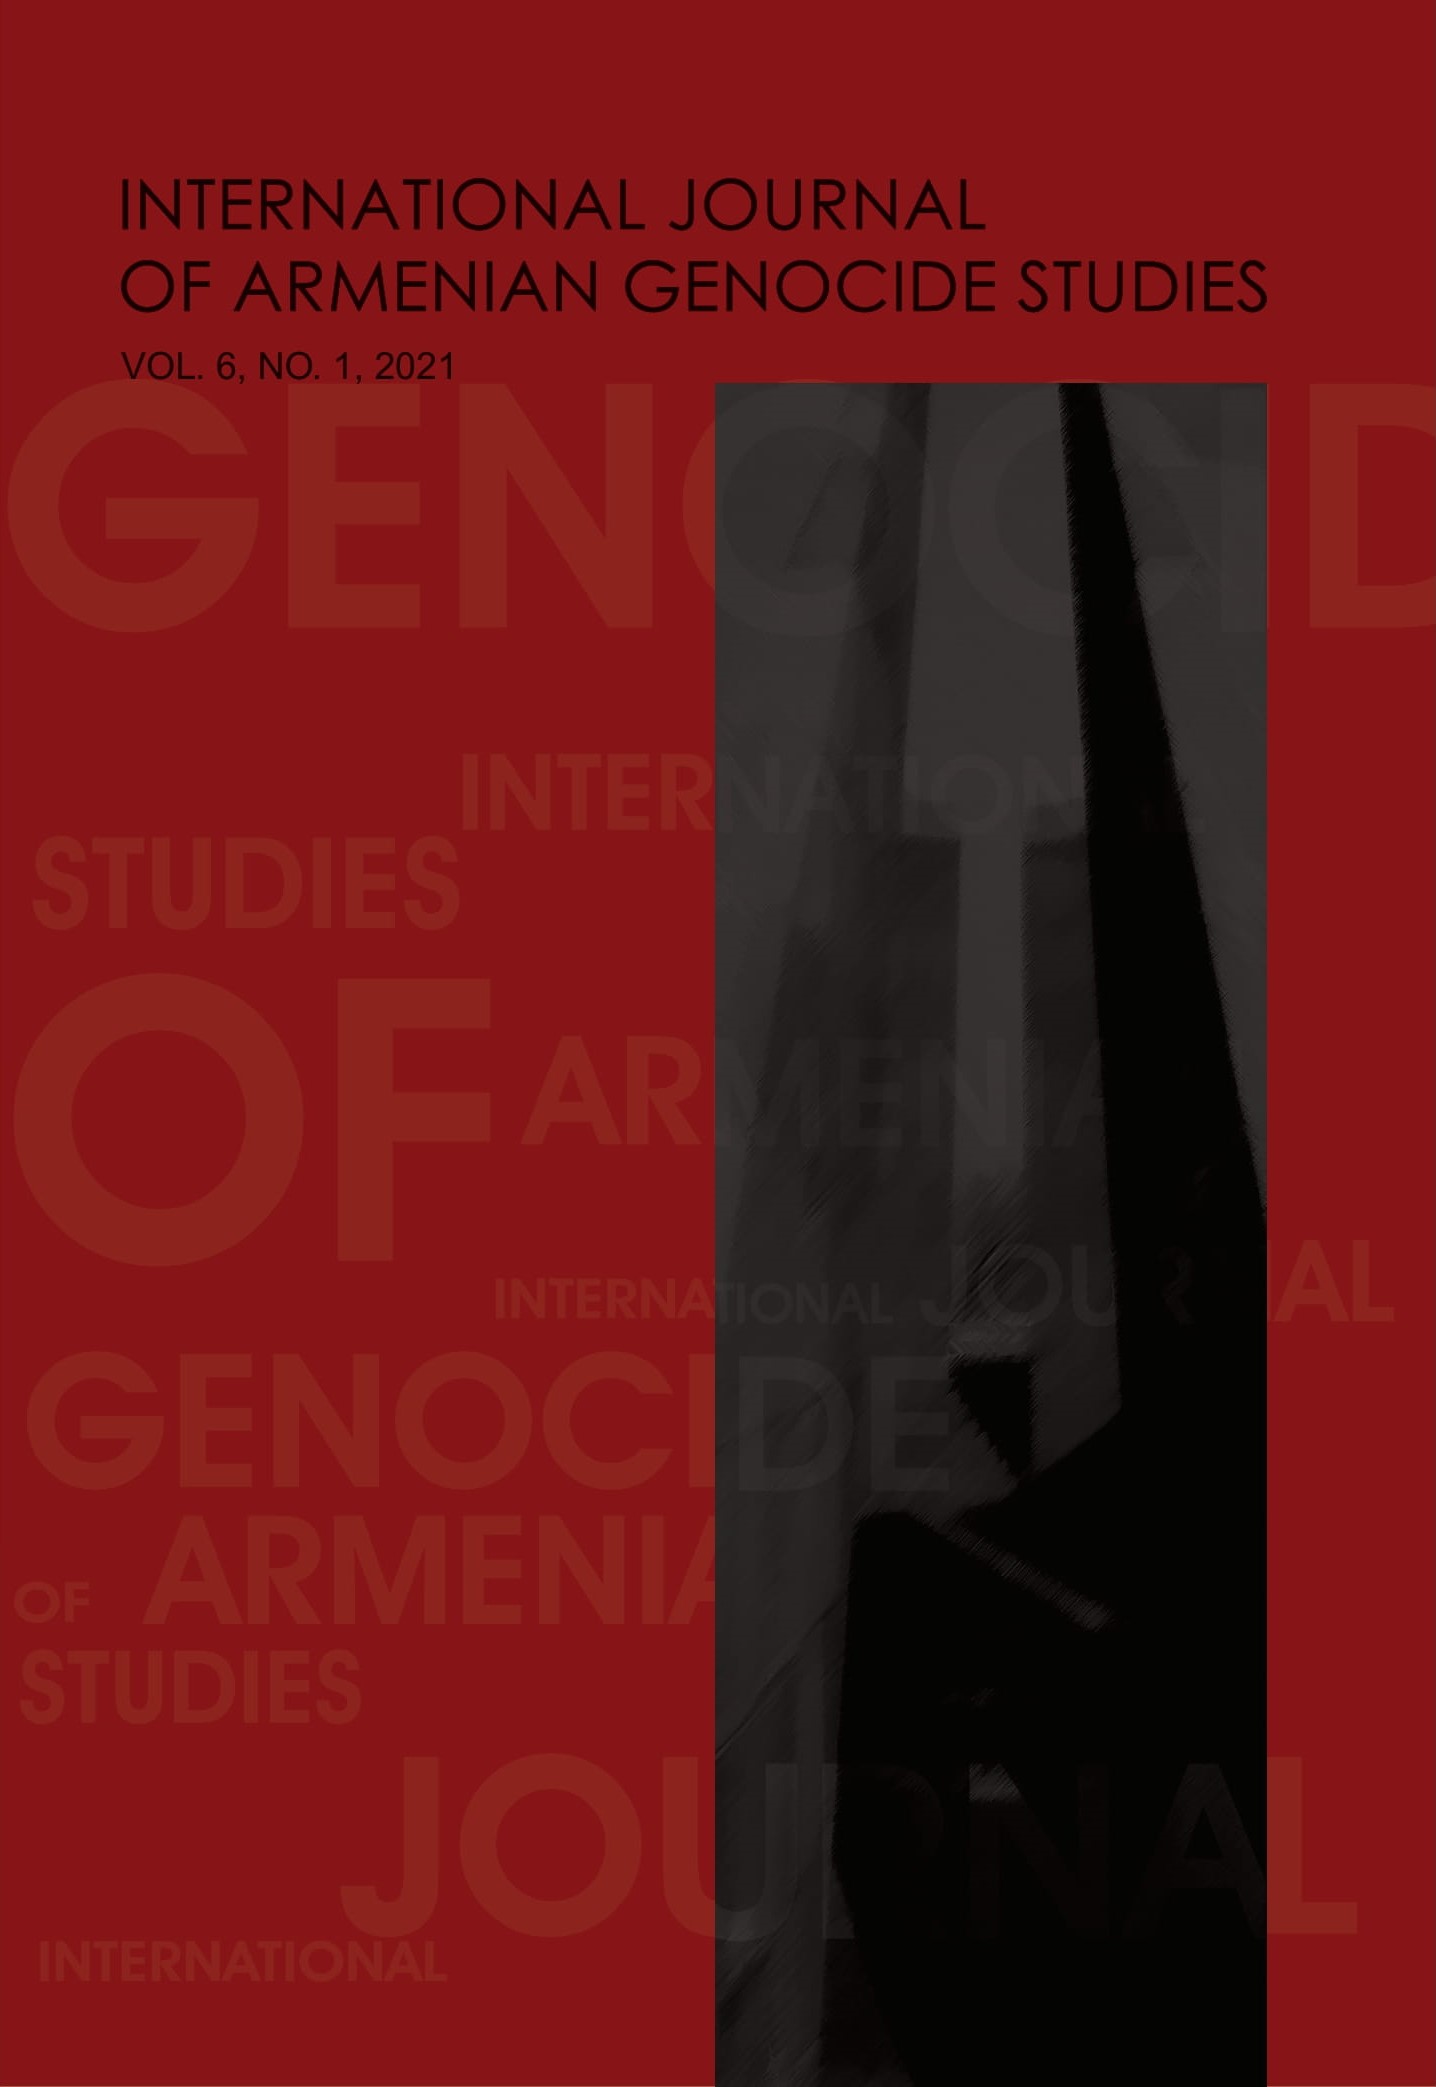 					View Vol. 6 No. 1 (2021): International Journal of Armenian Genocide Studies
				